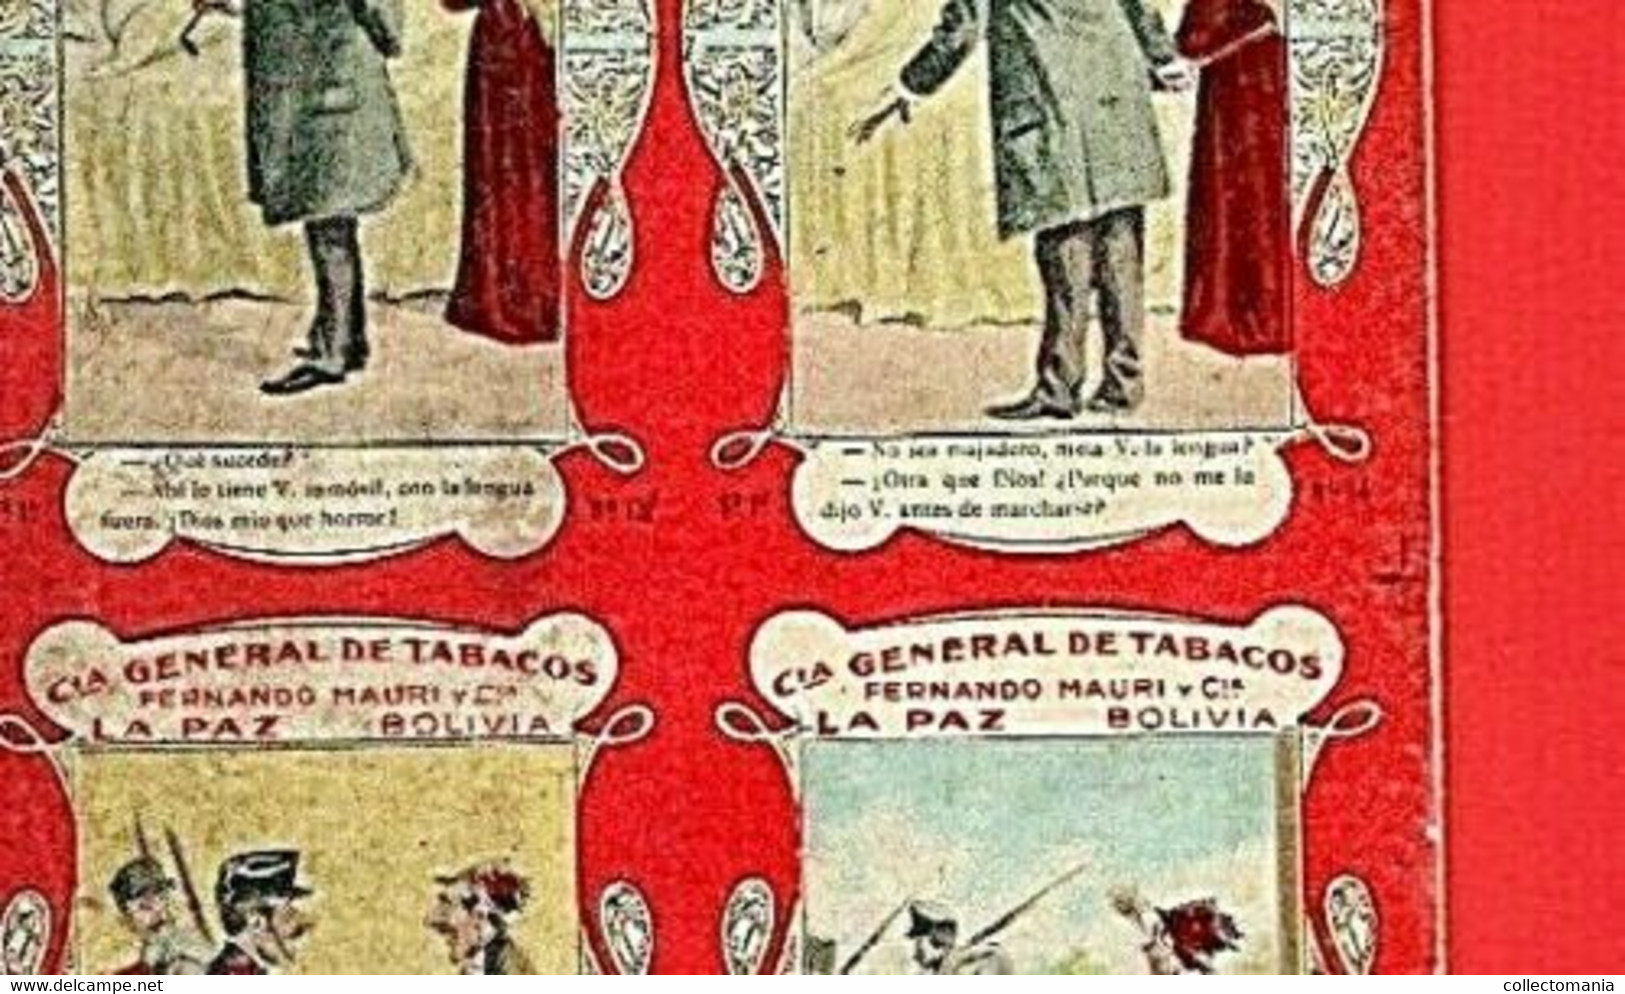 1880 Printed Litho Card, TABACOS LA PAZ Bolivia 9,2cmX20,2cm Cigarillos CAPRICHOS FERNANDO MAURI Cigarette Cards Proof - Verzamelingen & Kavels